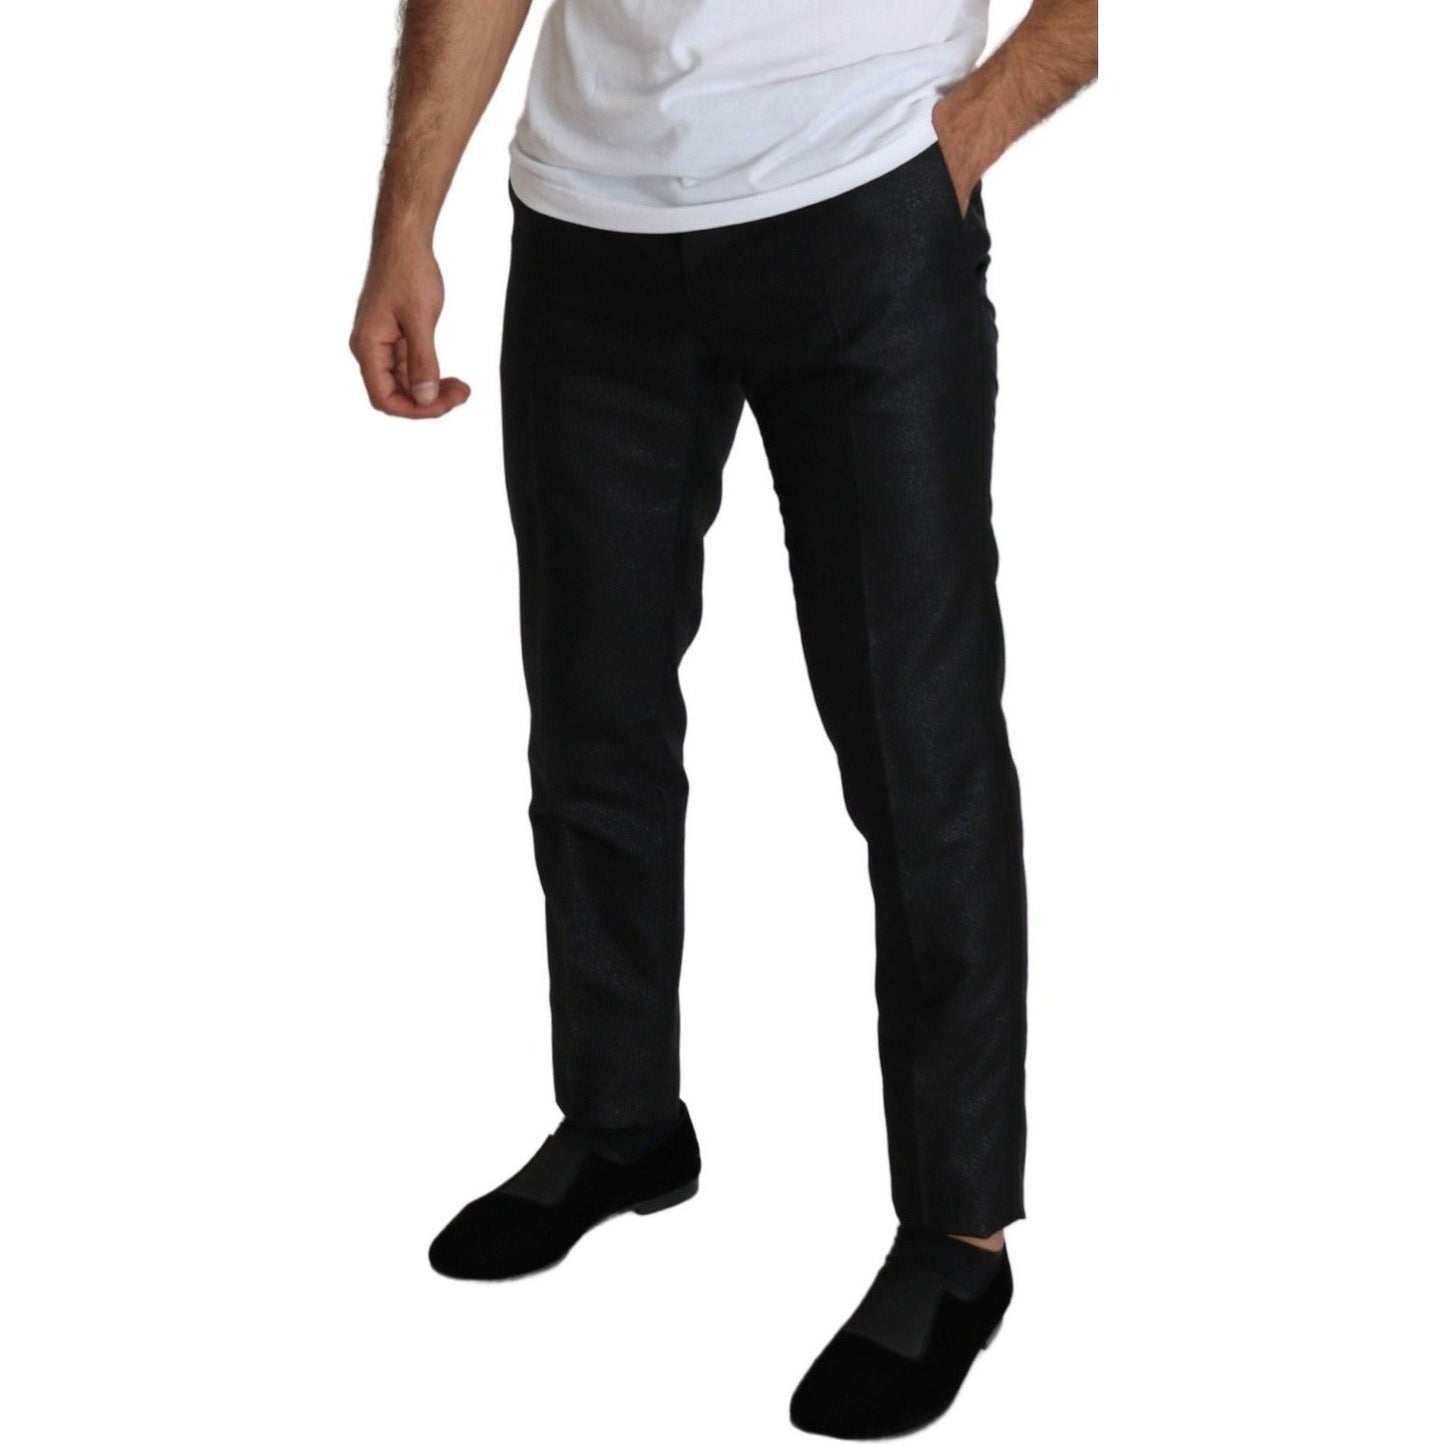 Dolce & Gabbana Elegant Metallic Black Dress Pants black-metallic-skinny-trouser-dress Jeans & Pants IMG_2242-f8f02717-4ee.jpg